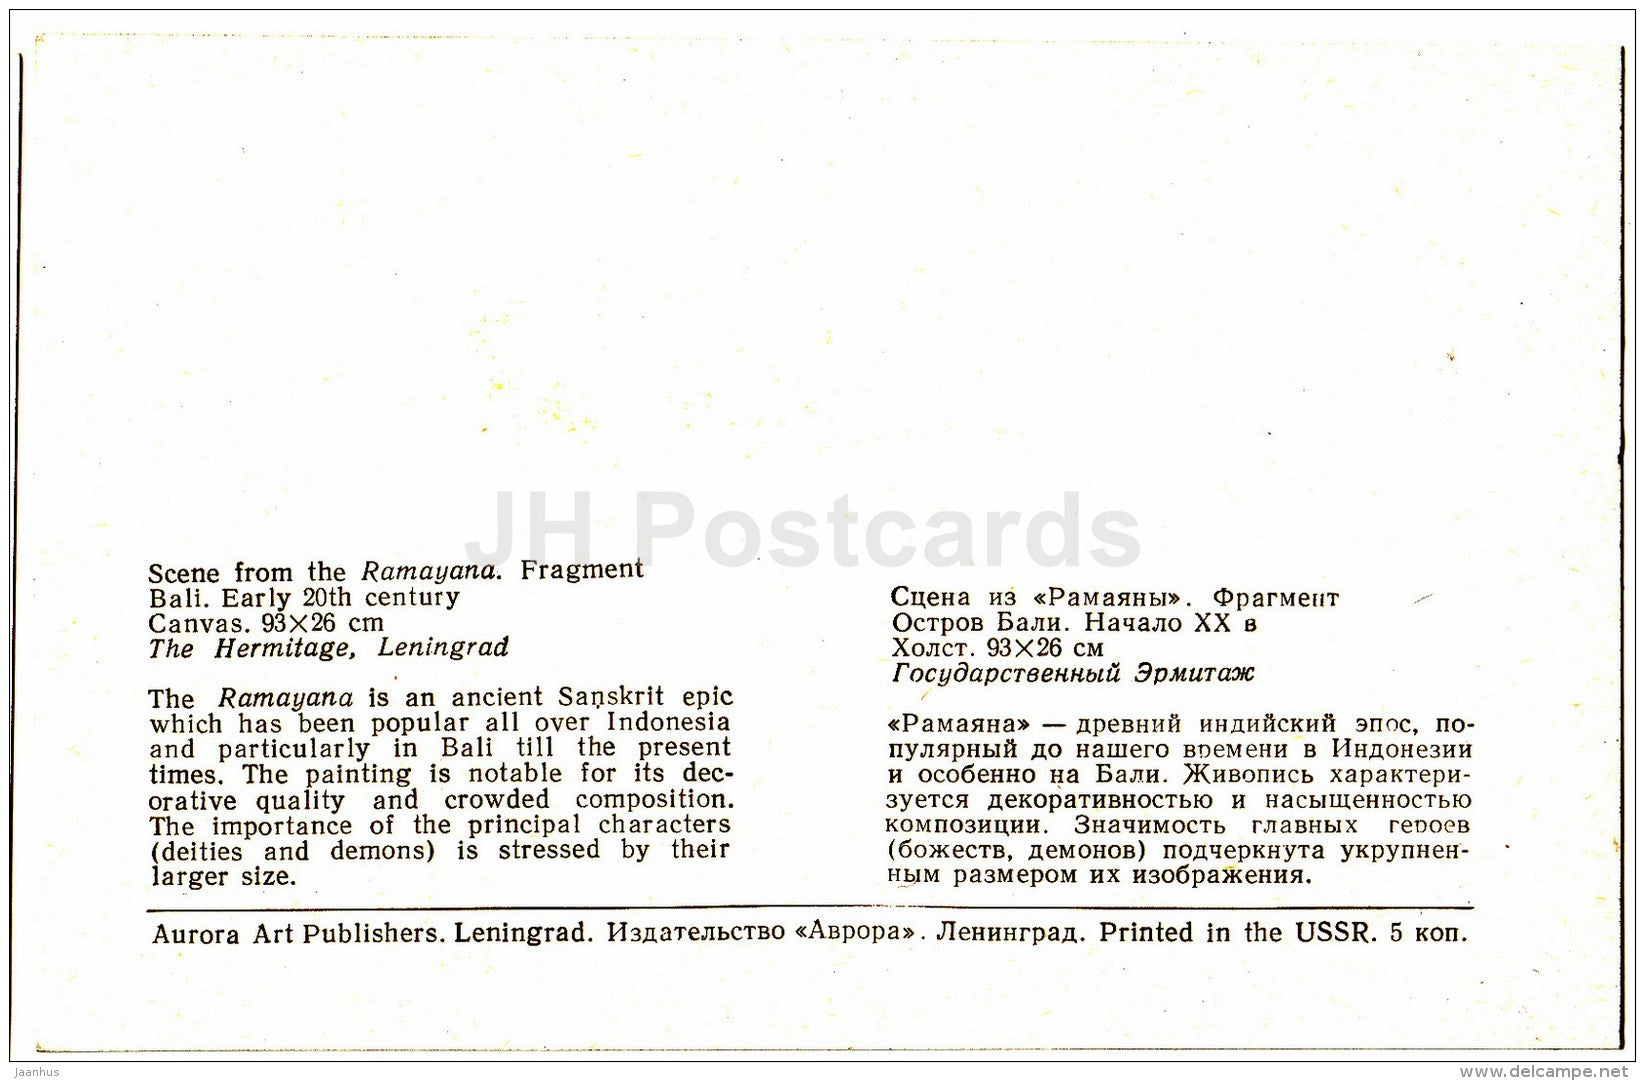 Scene from Ramayana - canvas - Bali - Indonesia - Russia USSR - unused - JH Postcards